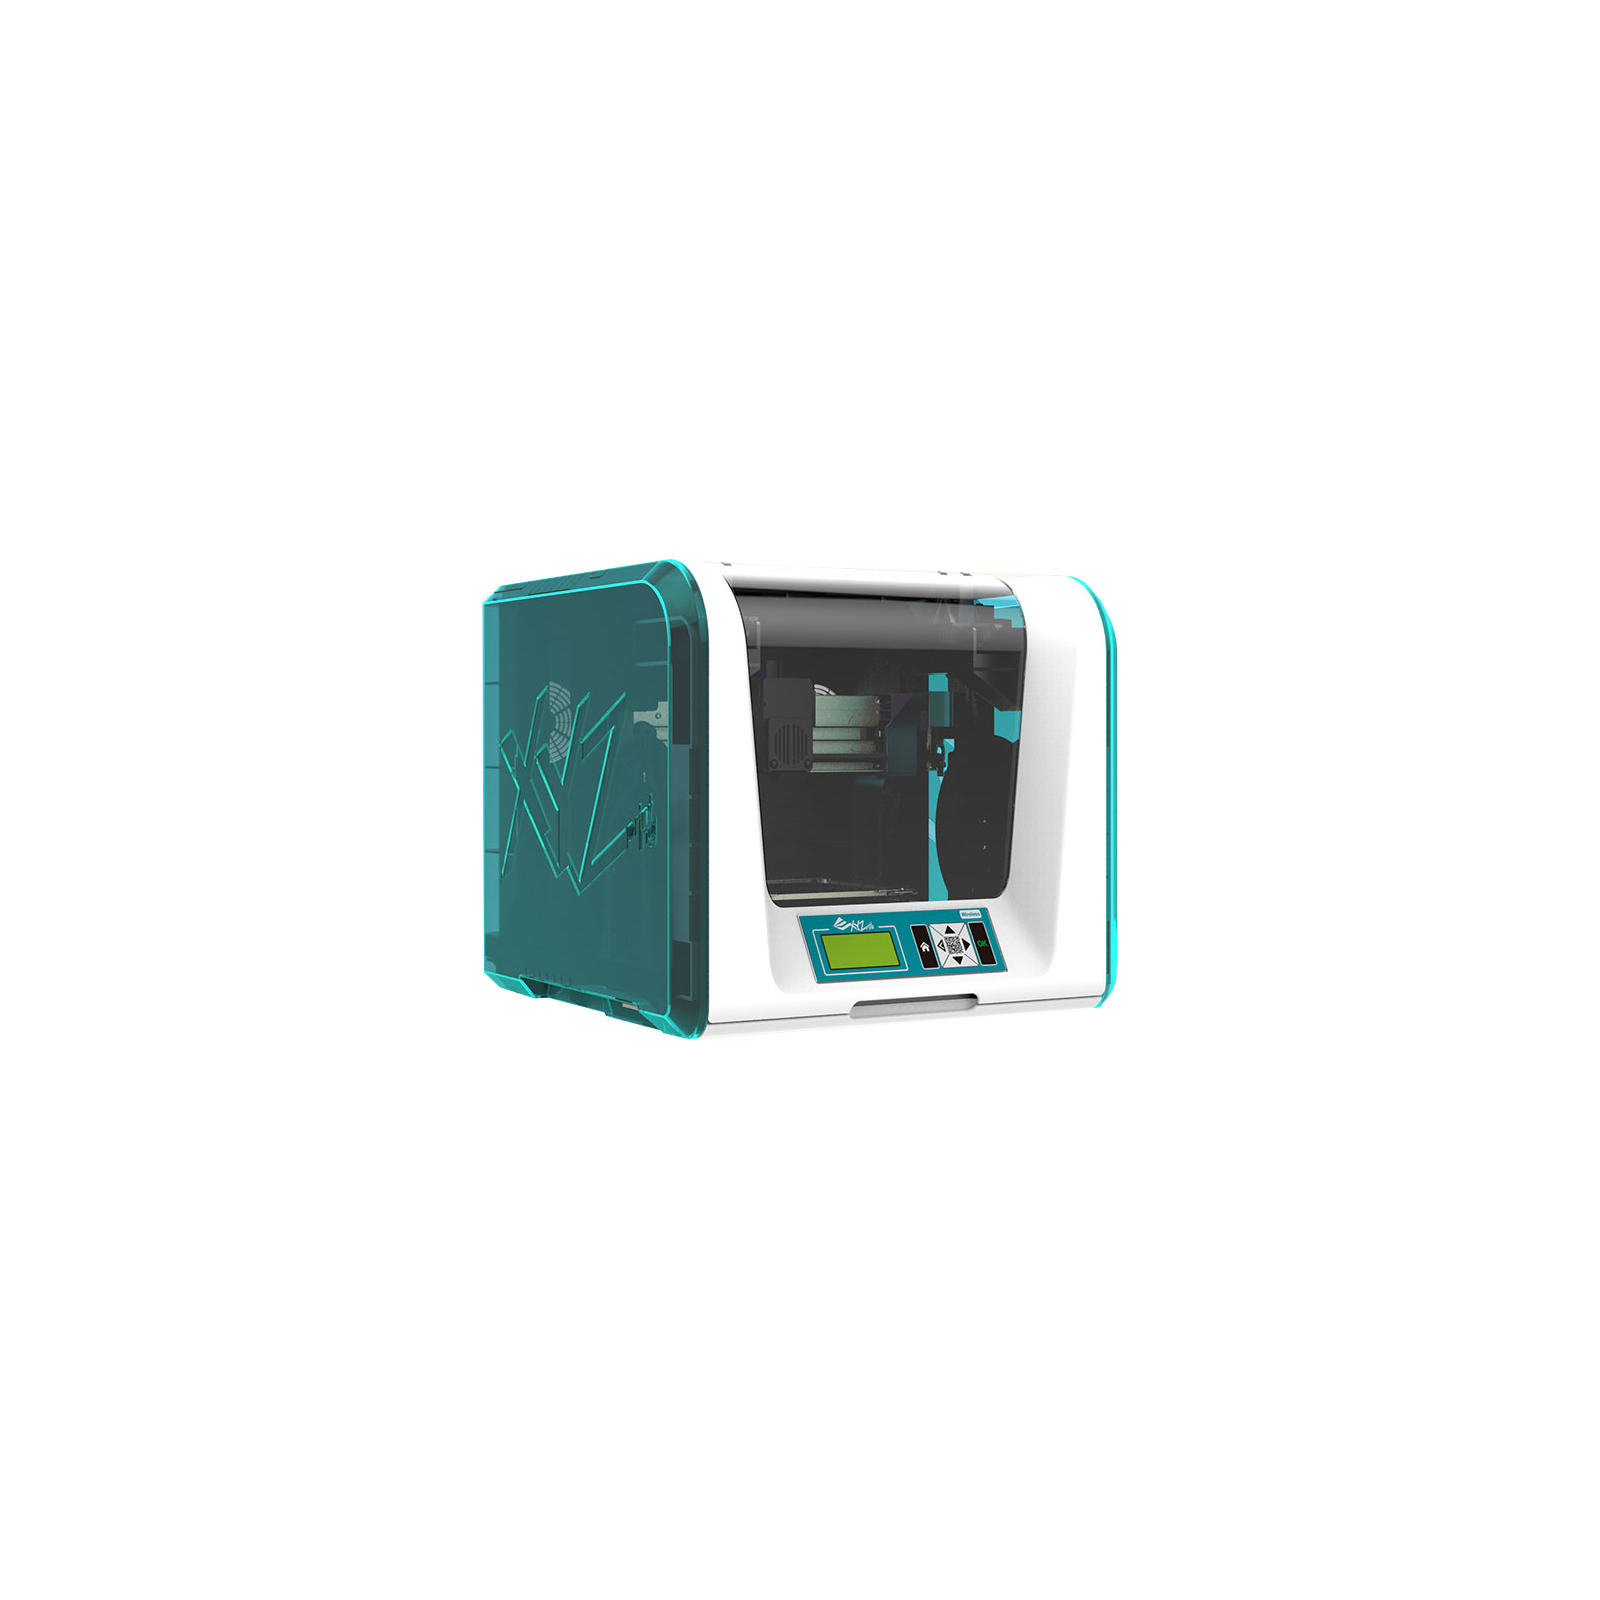 3D-принтер XYZprinting da Vinci Junior 1.0w WiFi (3F1JWXEU00D) изображение 6